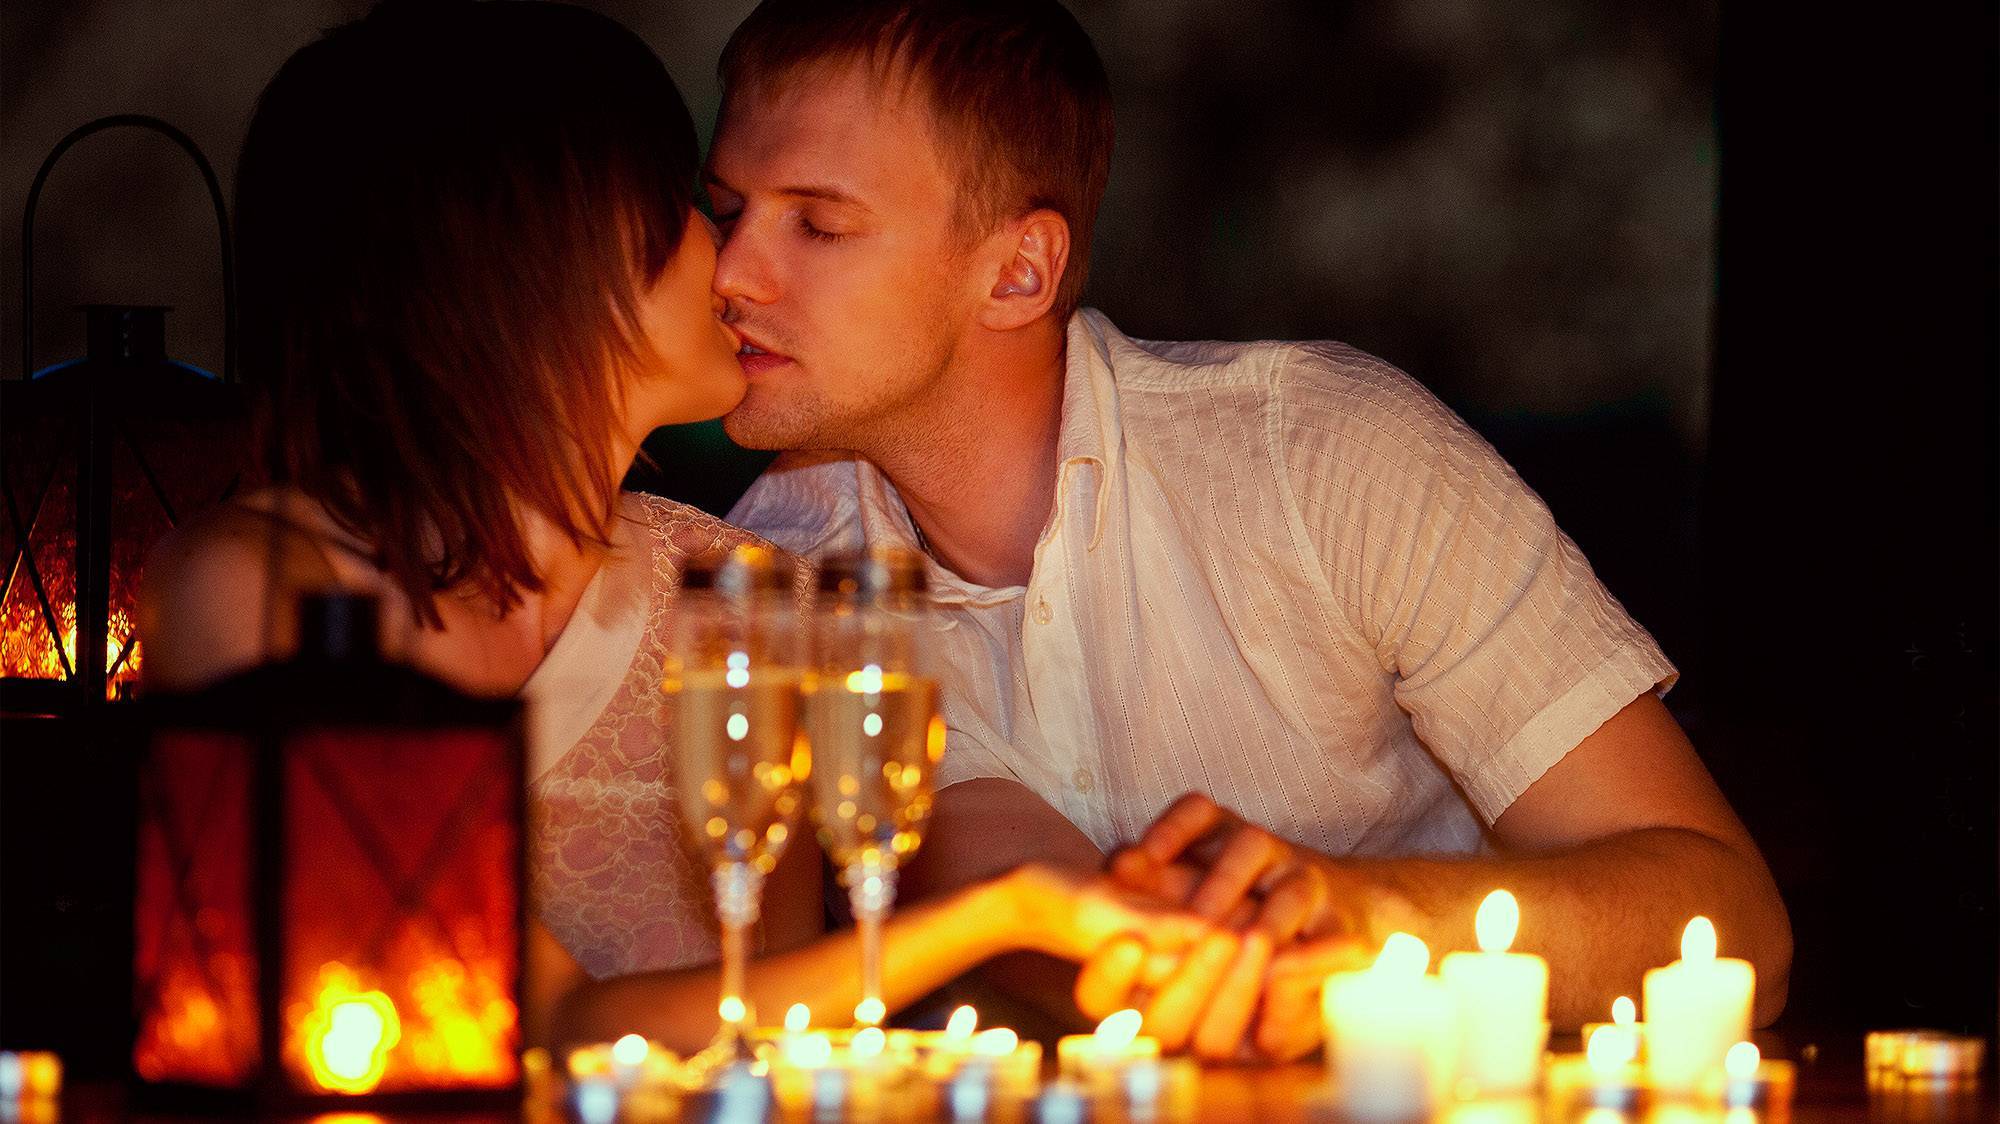 Как устроить романтик любимому мужчине? - блог ярослава самойлова